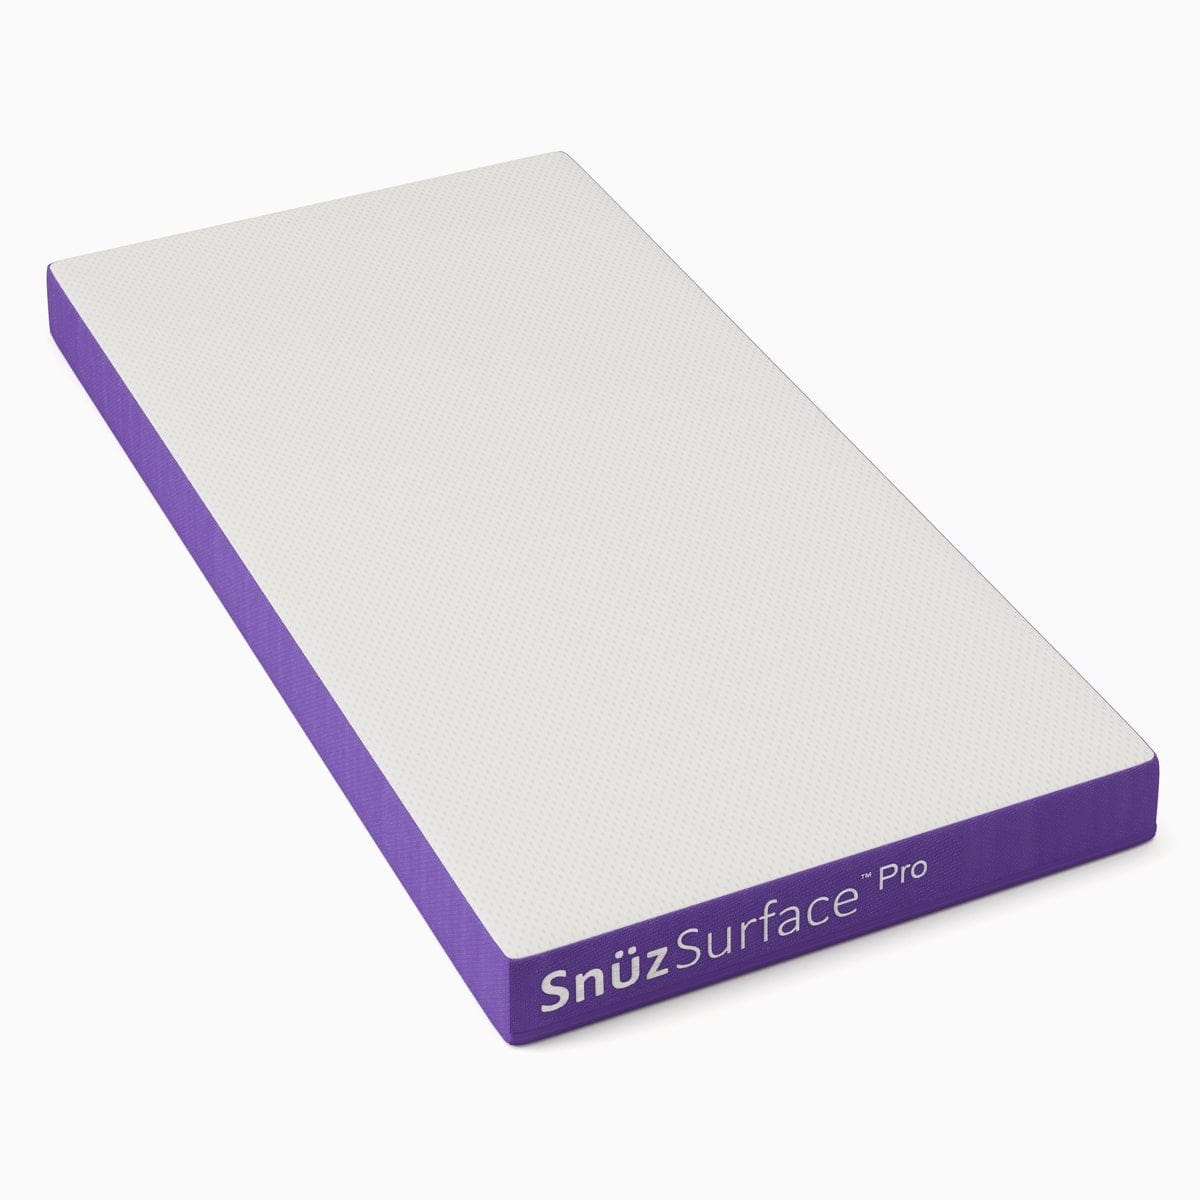 Snuz Mattress Cot Bed 70cm x 140cm SnuzSurface Pro Adaptable Mattress - Direct Delivery